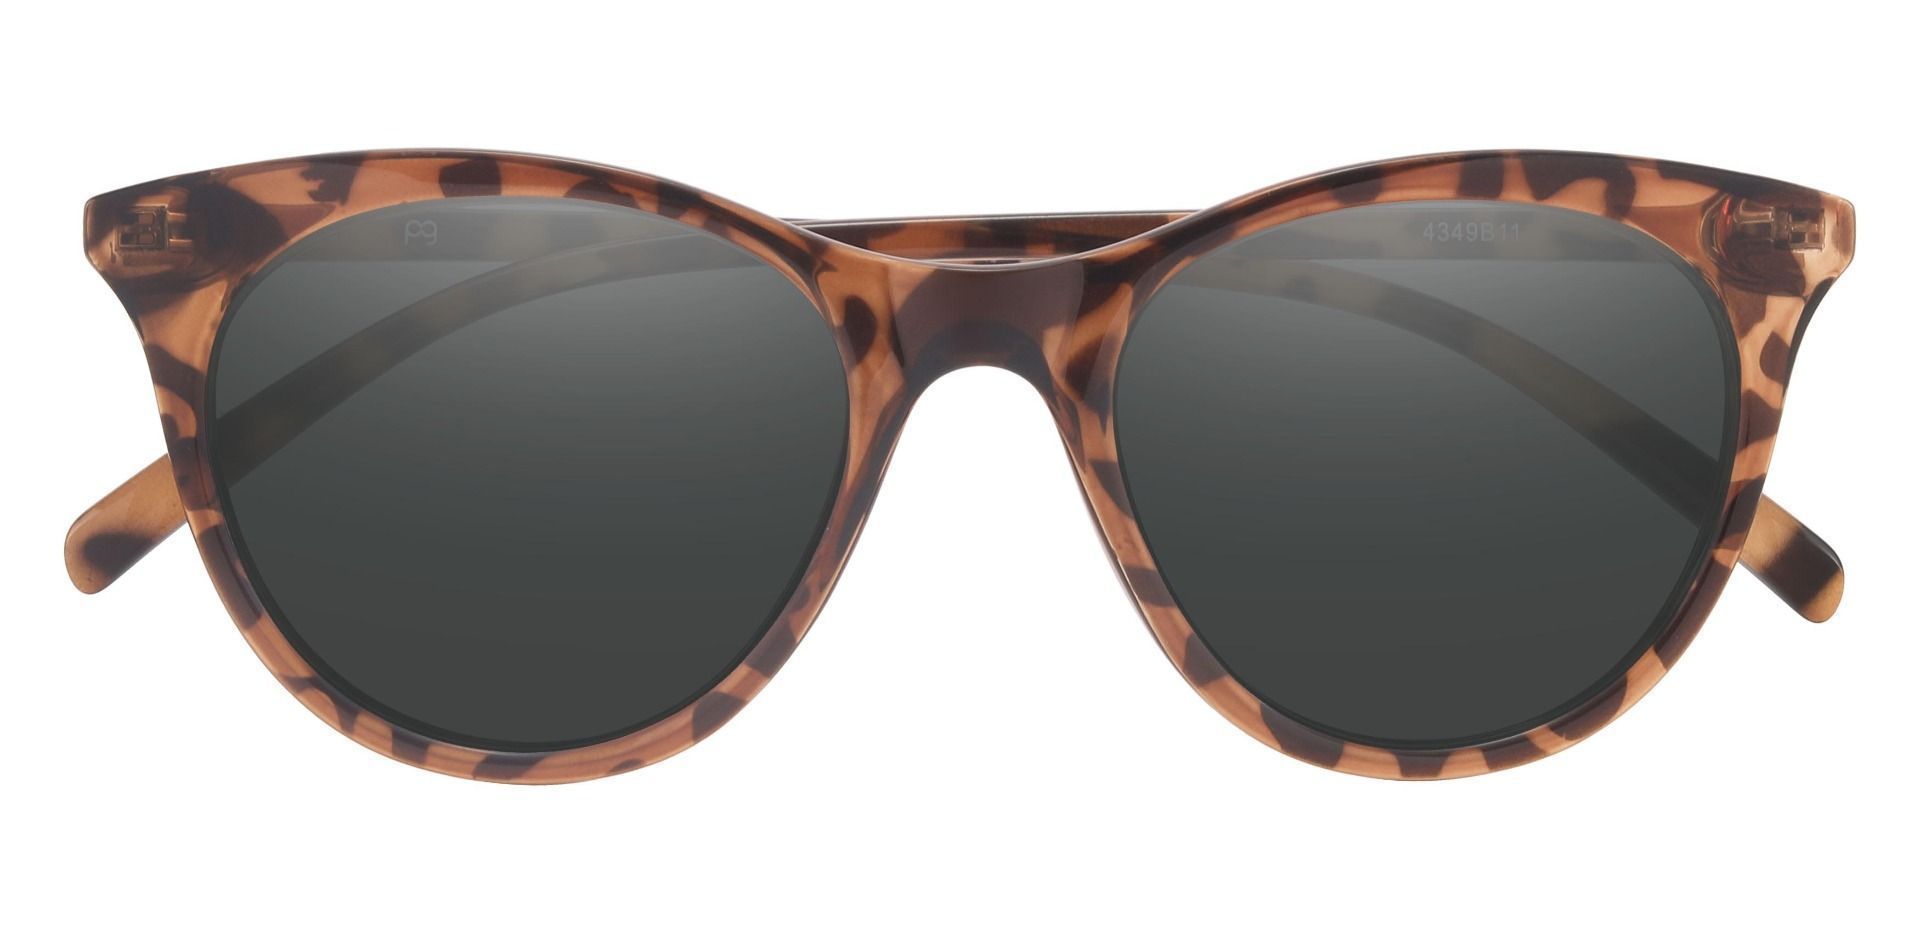 Valencia Cat Eye Prescription Sunglasses - Brown Frame With Gray Lenses